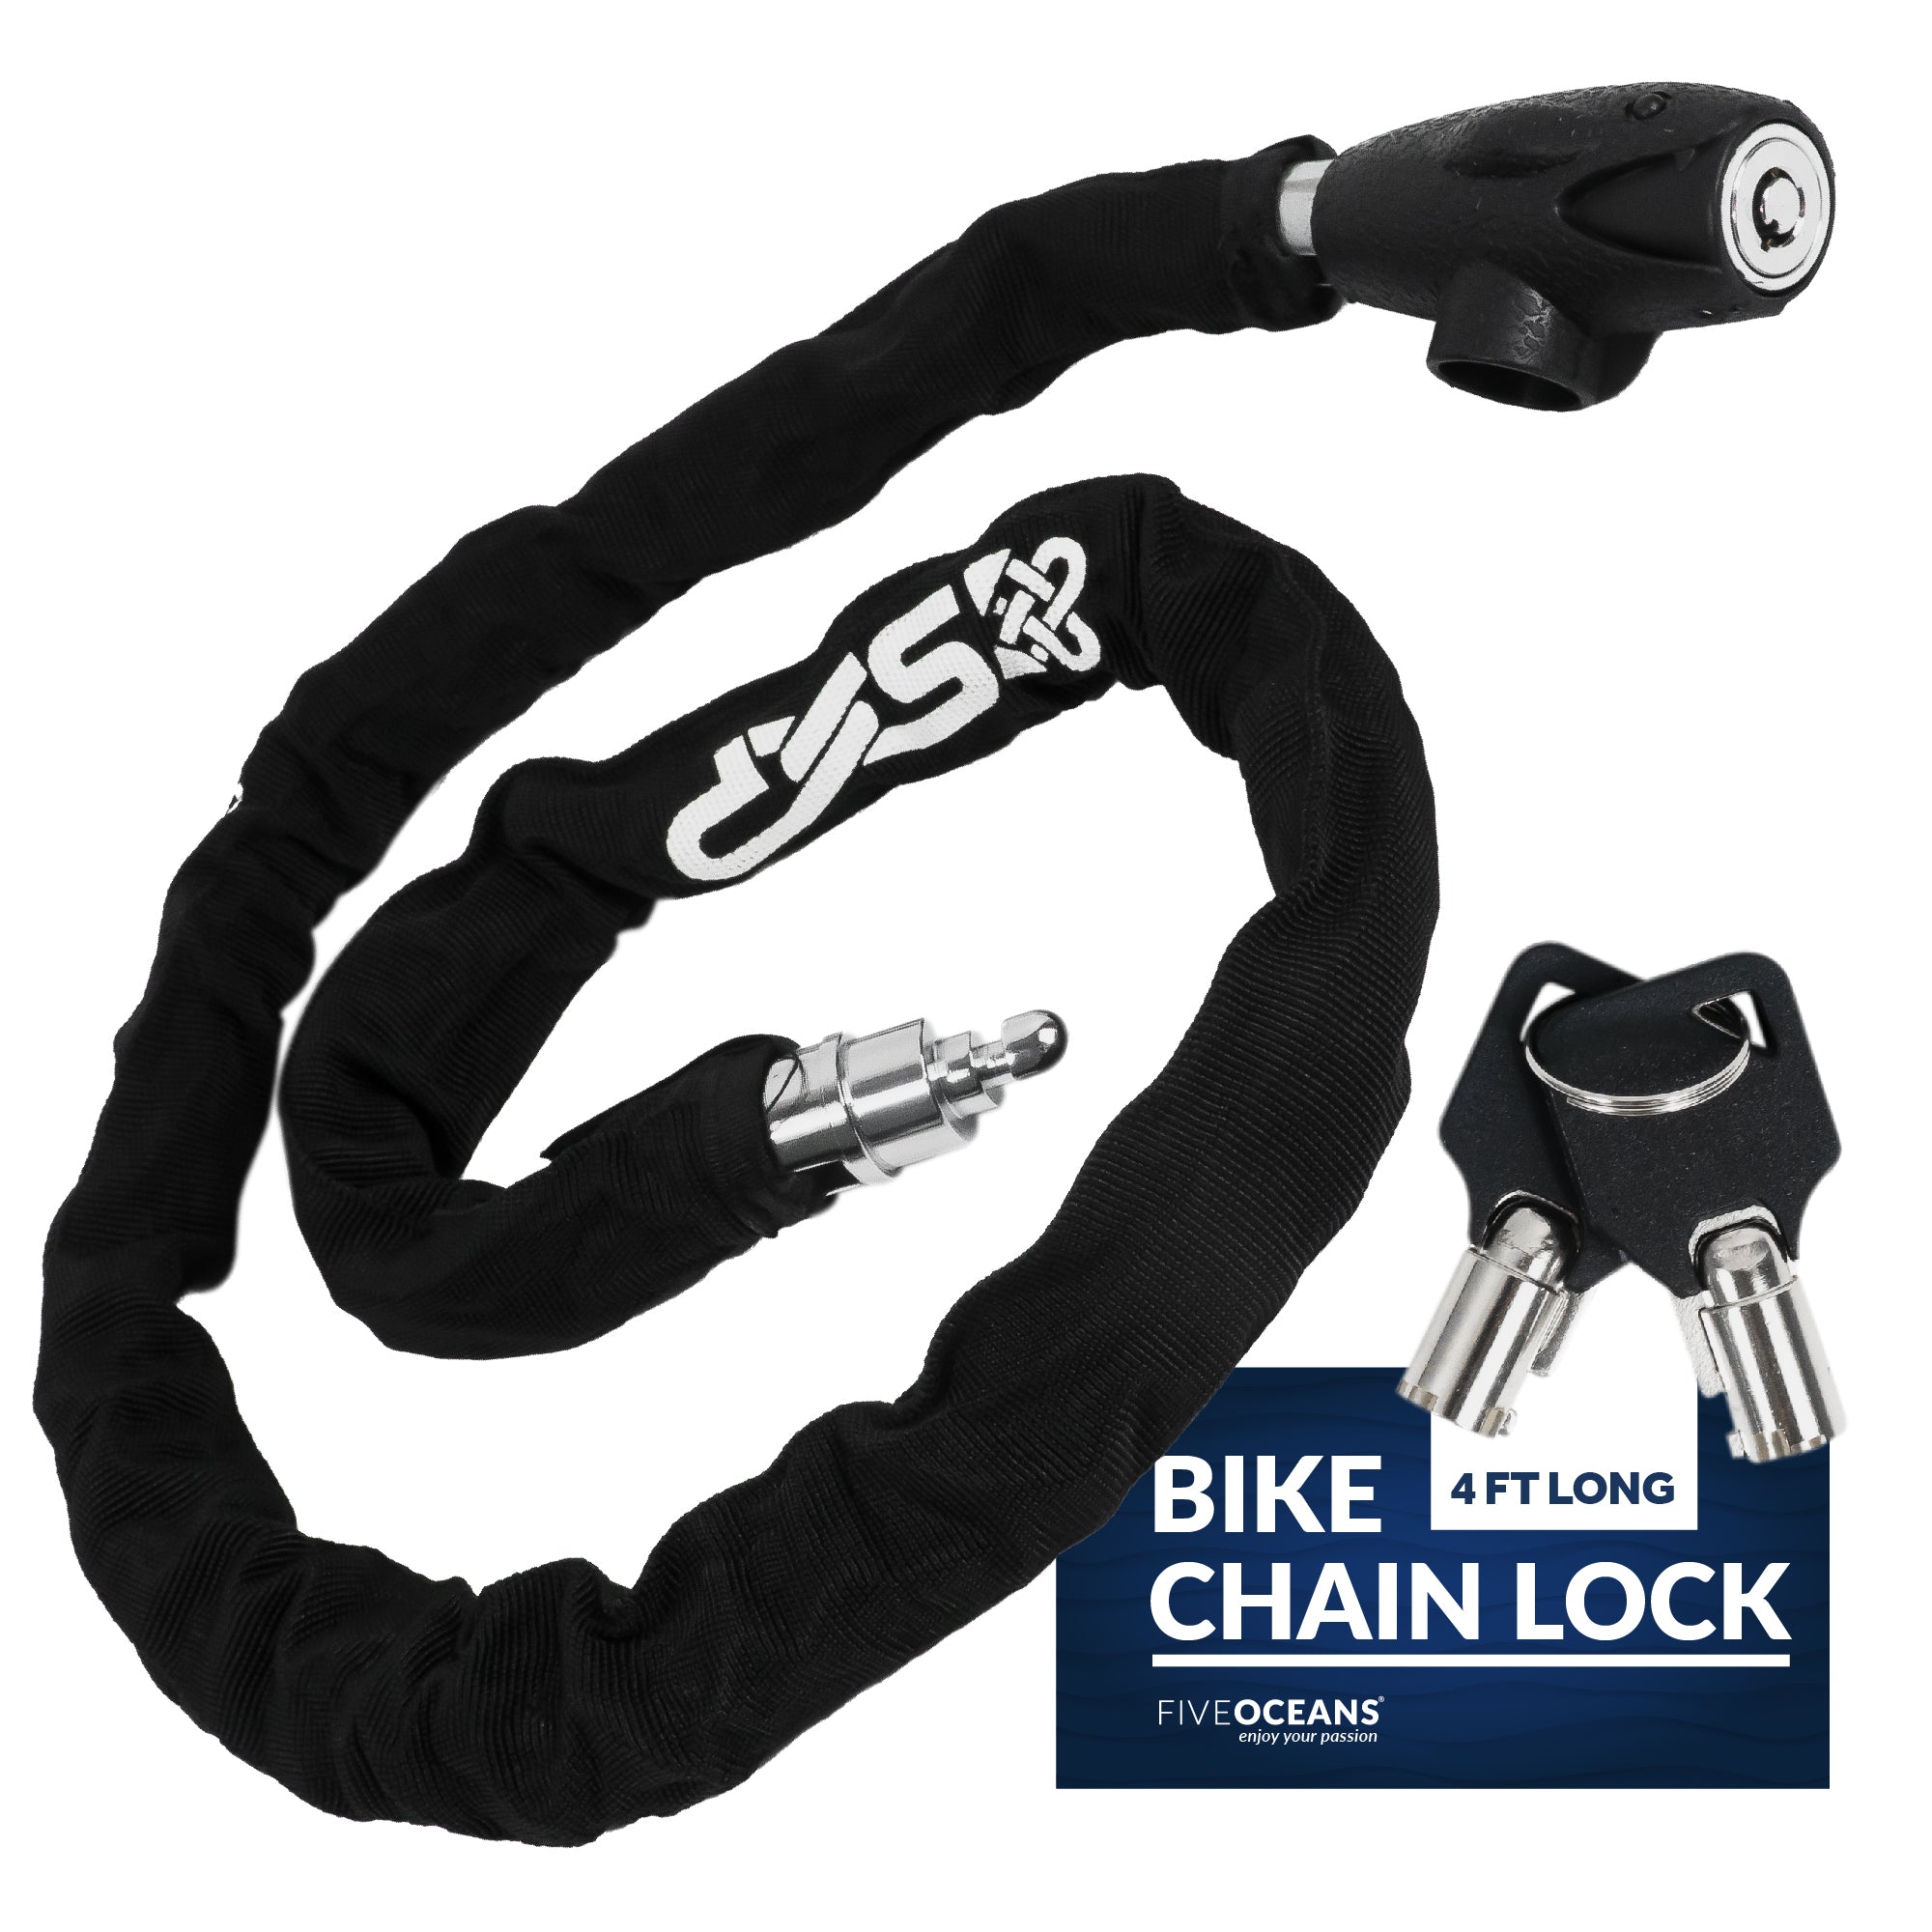 Bike Chain Lock, Keyed, with Mounting Bracket, 4' - FO3959